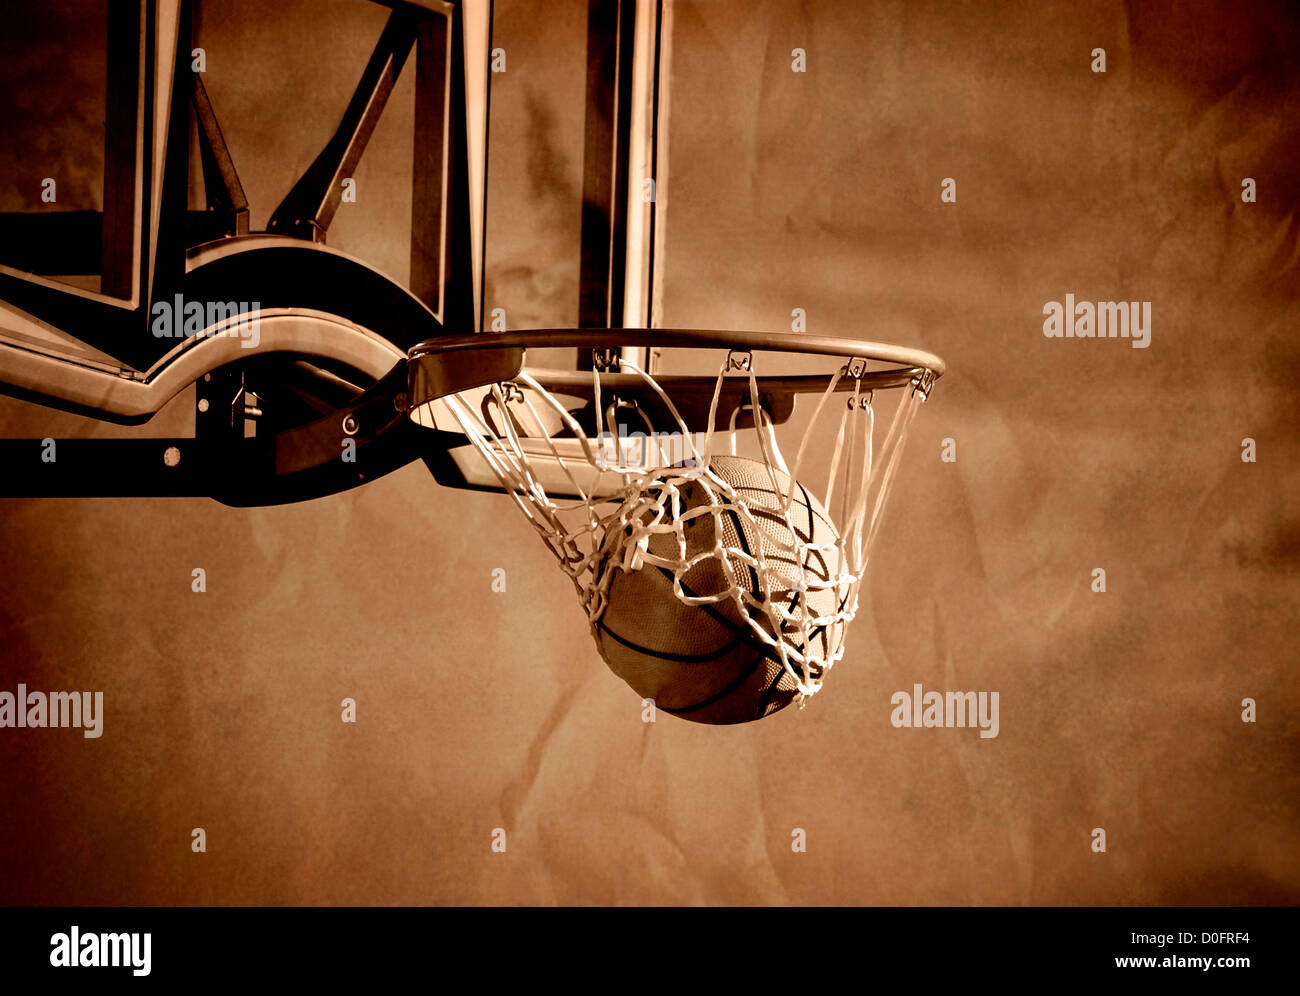 Action shot of basketball going through basketball hoop and net Stock Photo